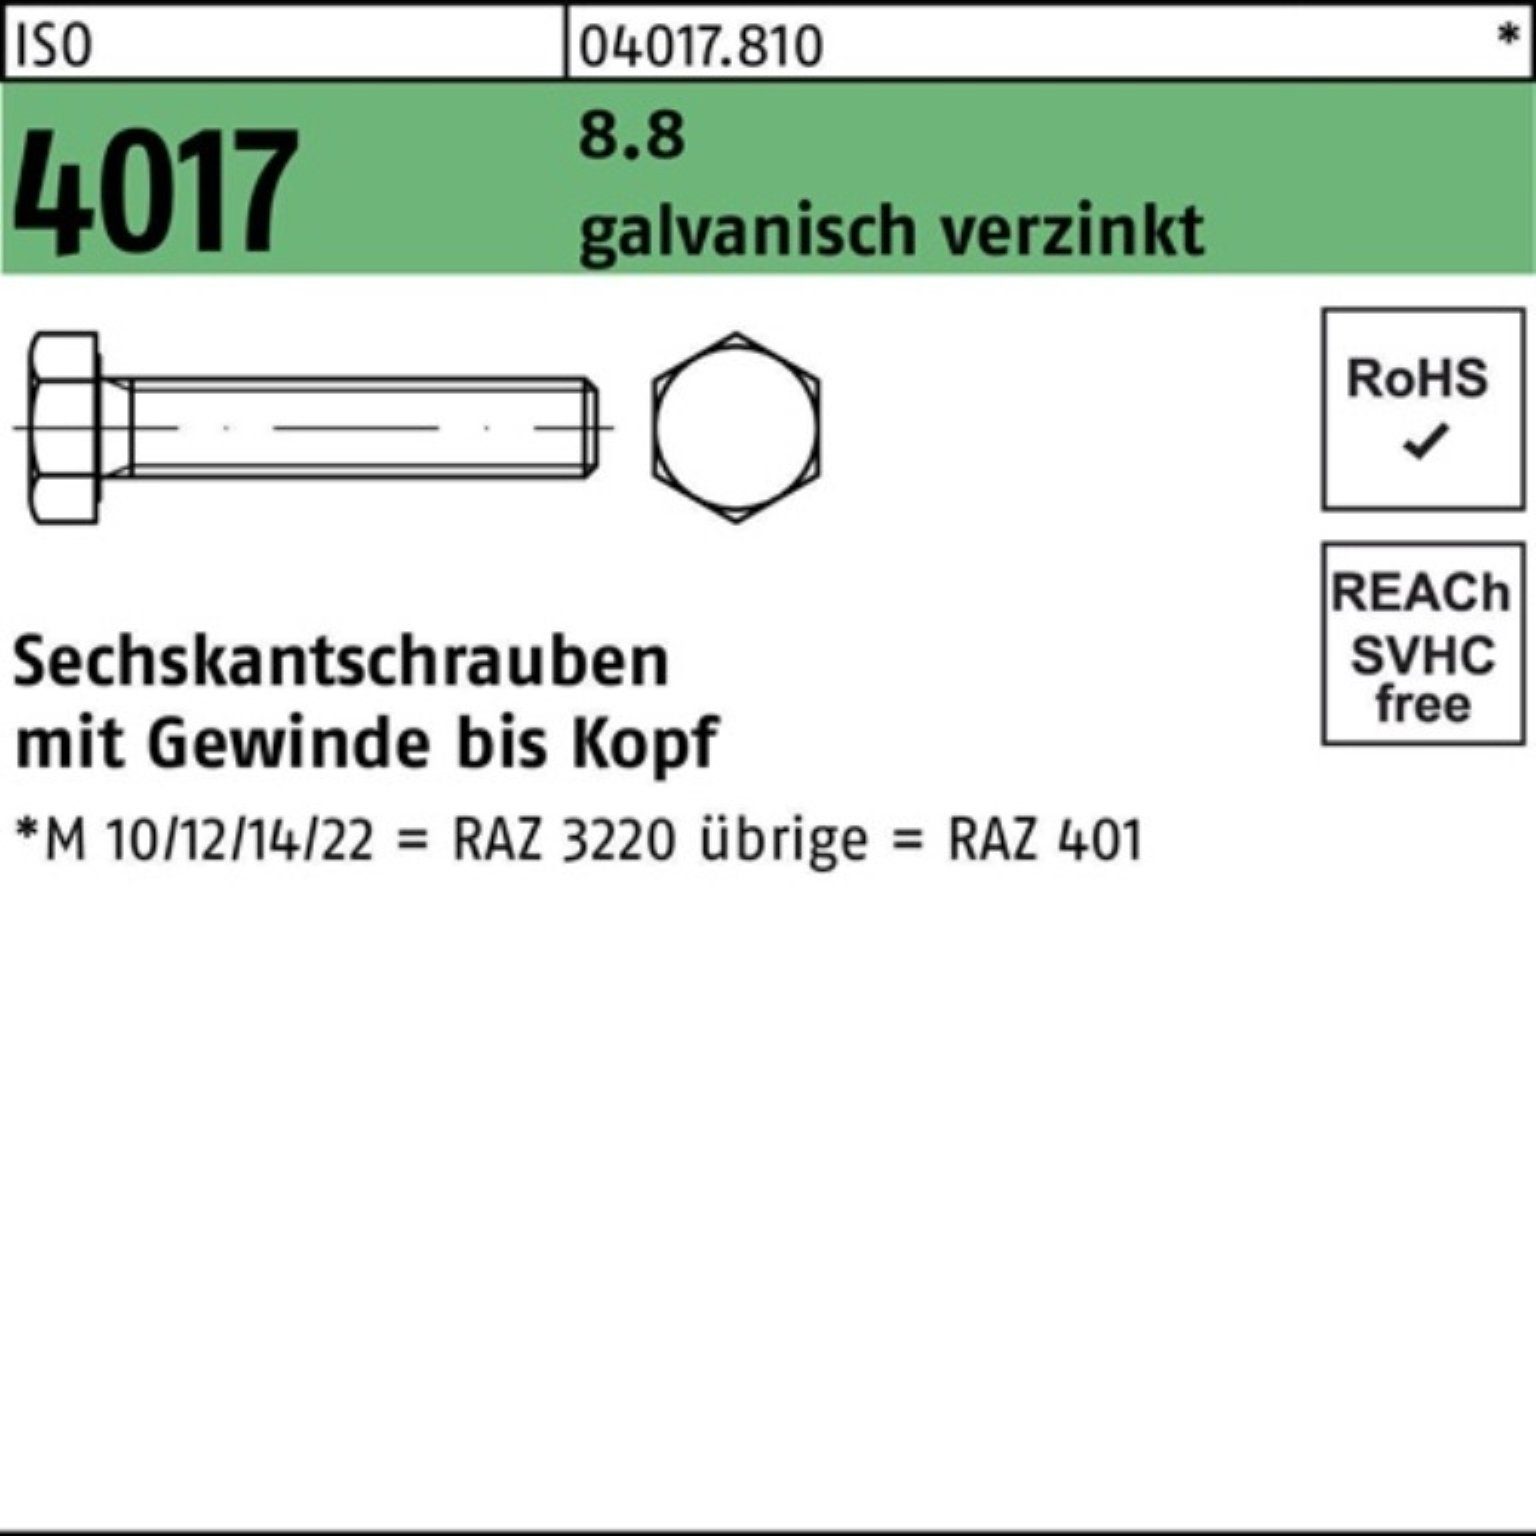 ISO Sechskantschraube 4017 Sechskantschraube VG St M10x 200 Pack 22 Bufab 200er galv.verz. 8.8